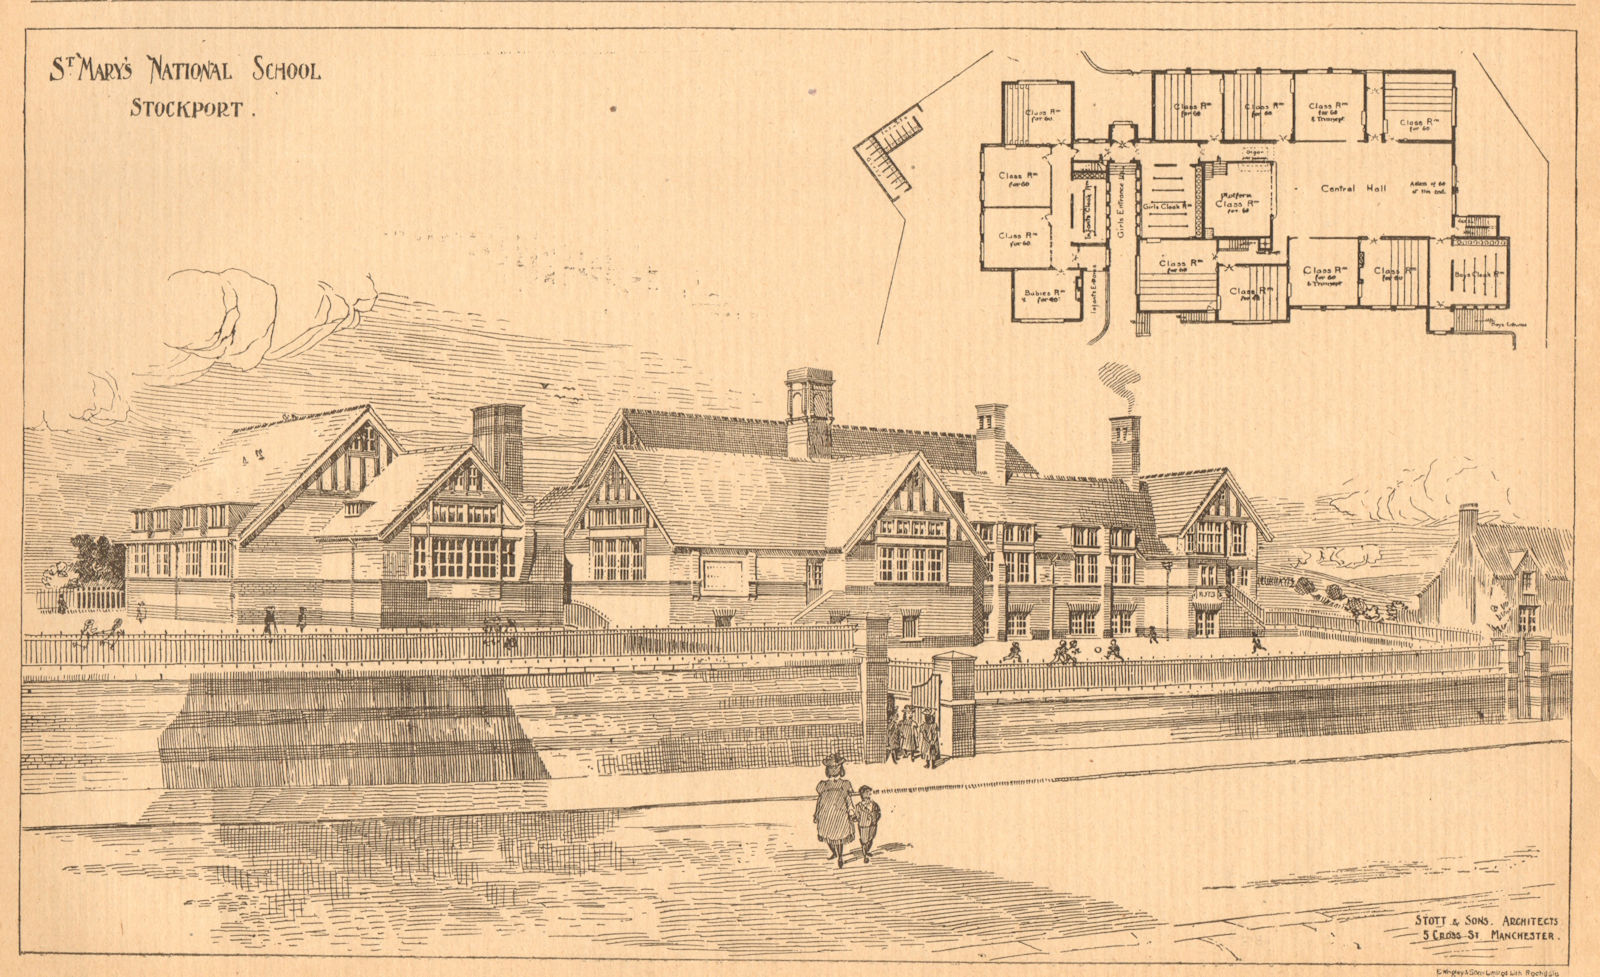 St Mary's National school, Stockport, Stott & sons, Architects. Cheshire 1902